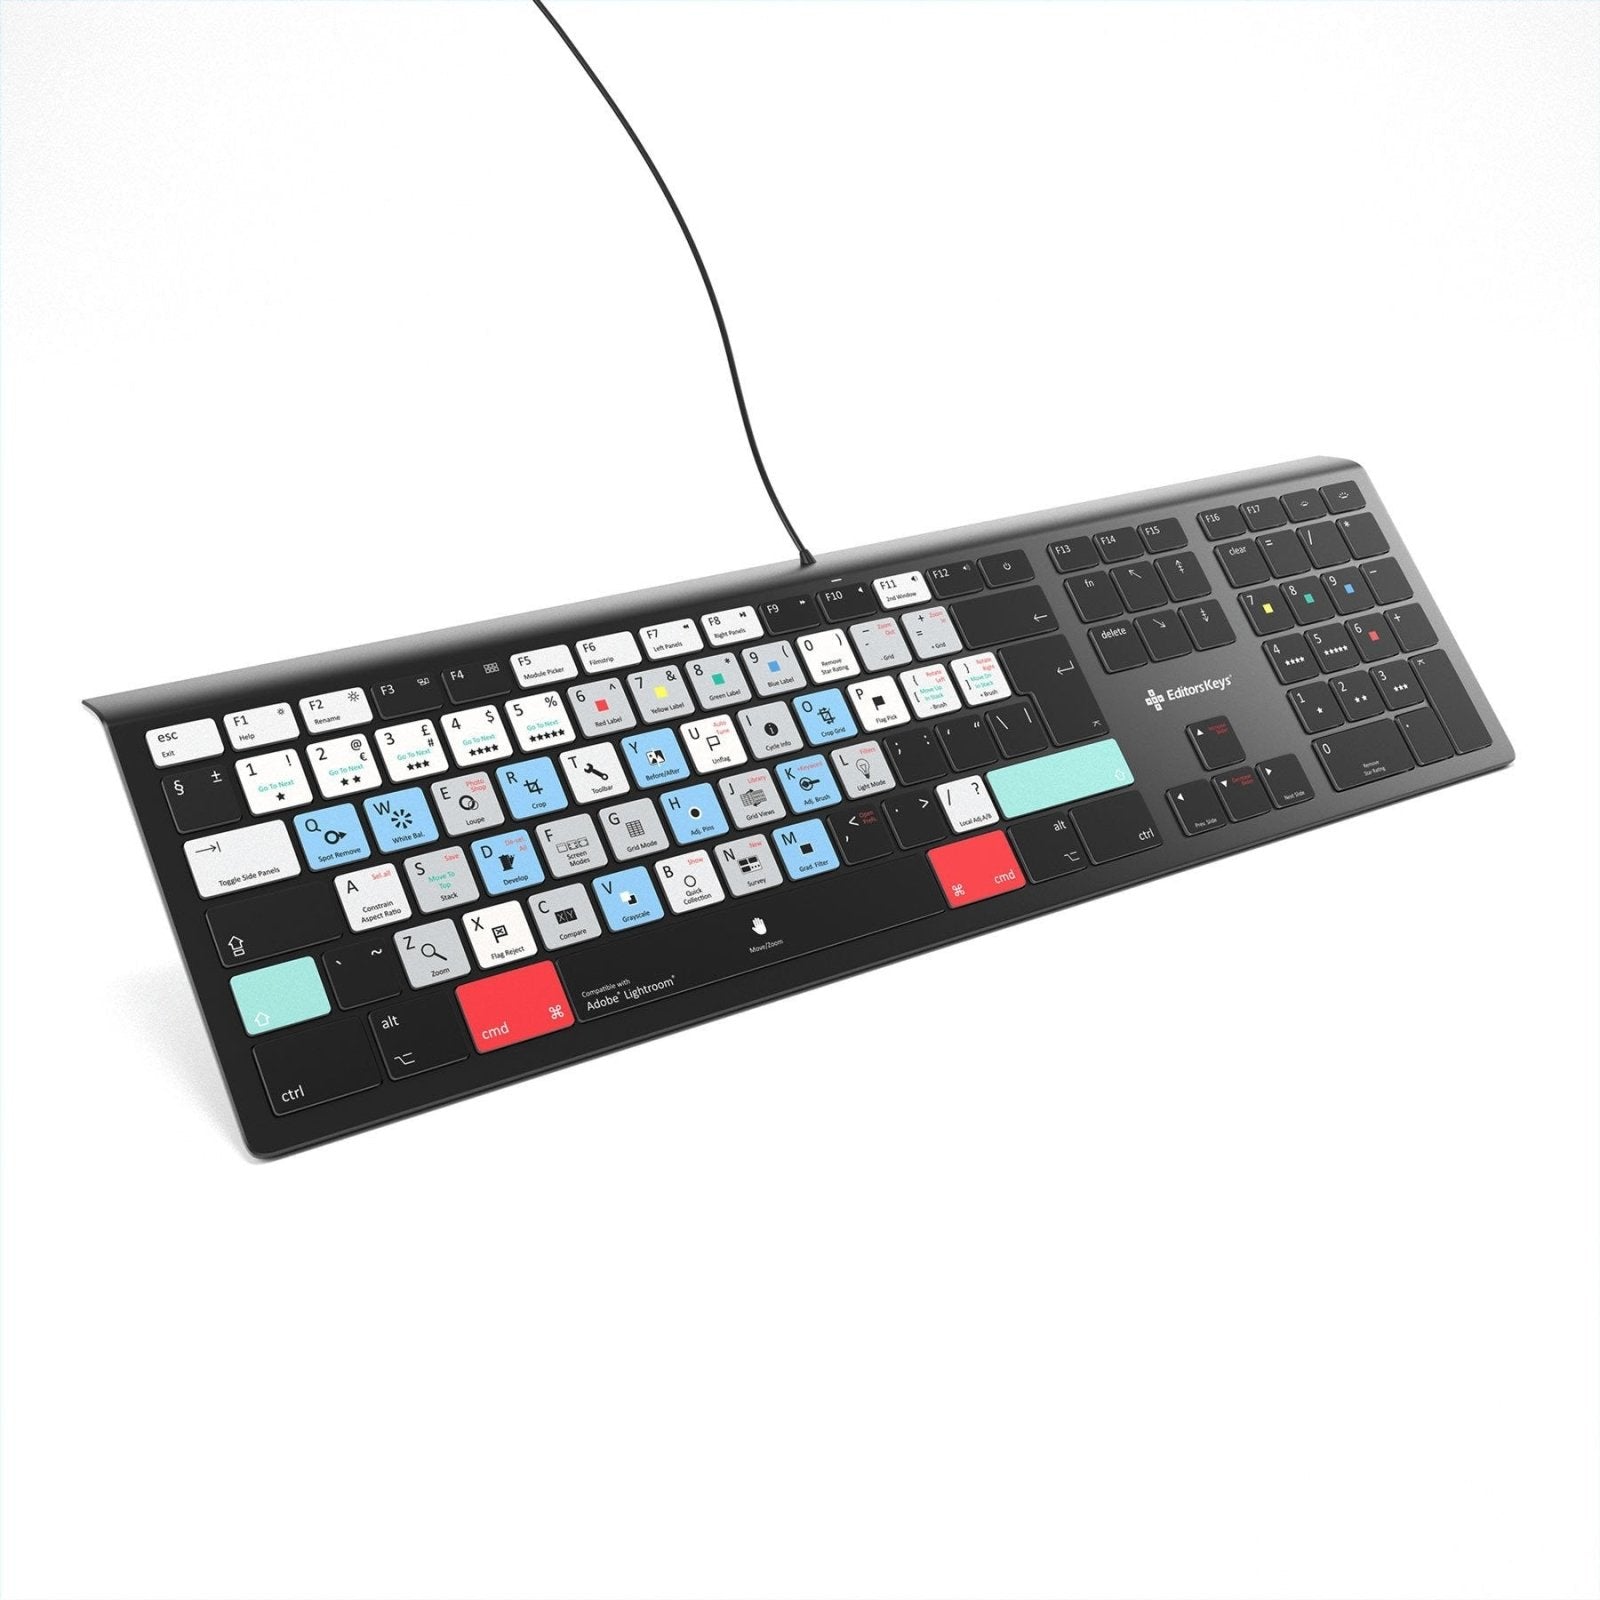 Adobe Lightroom Keyboard - Backlit Mac or PC - Editors Keys